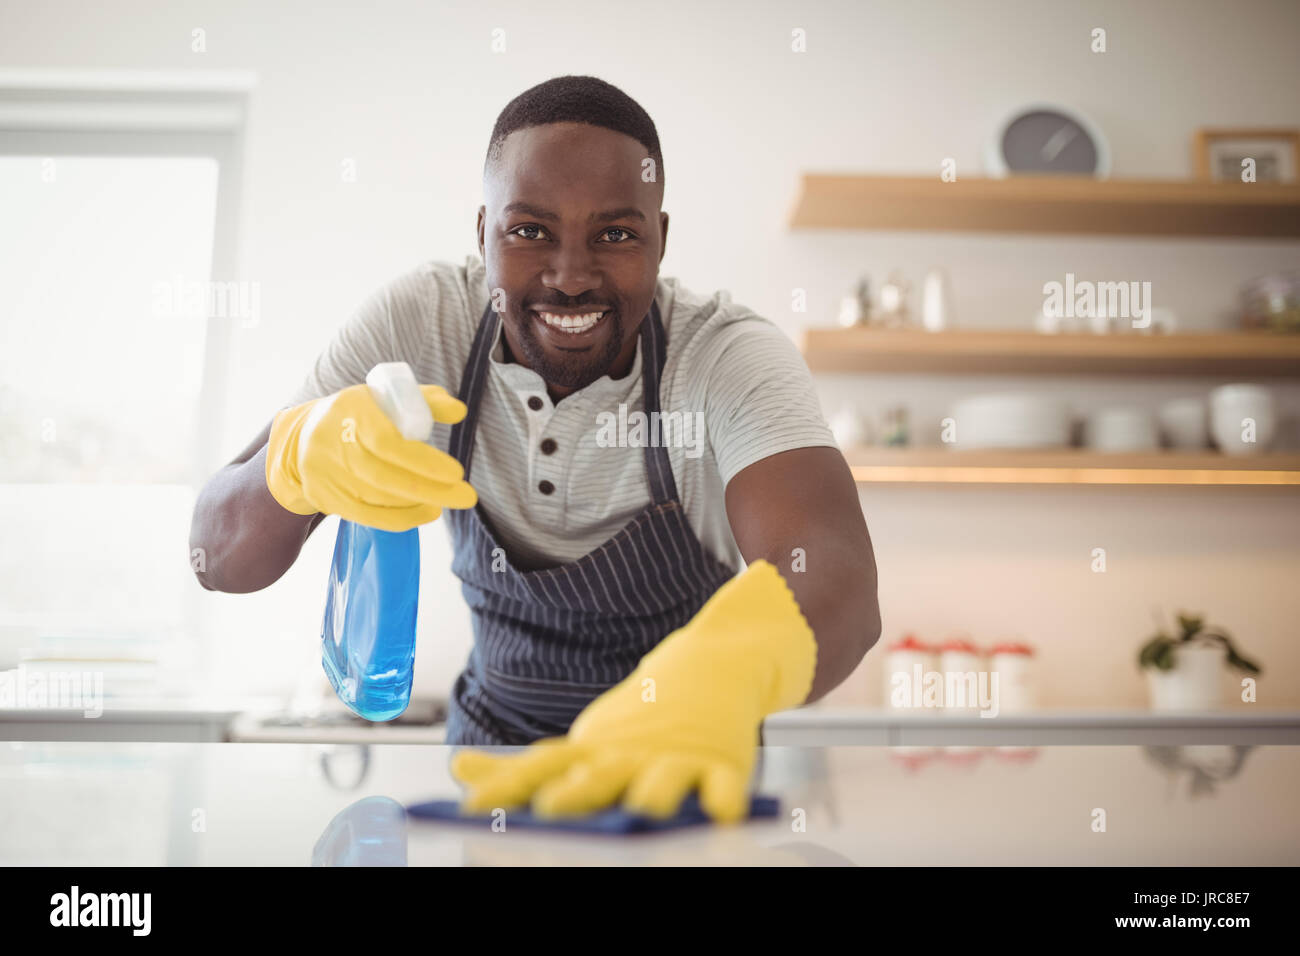 https://c8.alamy.com/comp/JRC8E7/portrait-of-smiling-man-cleaning-the-kitchen-worktop-at-home-JRC8E7.jpg